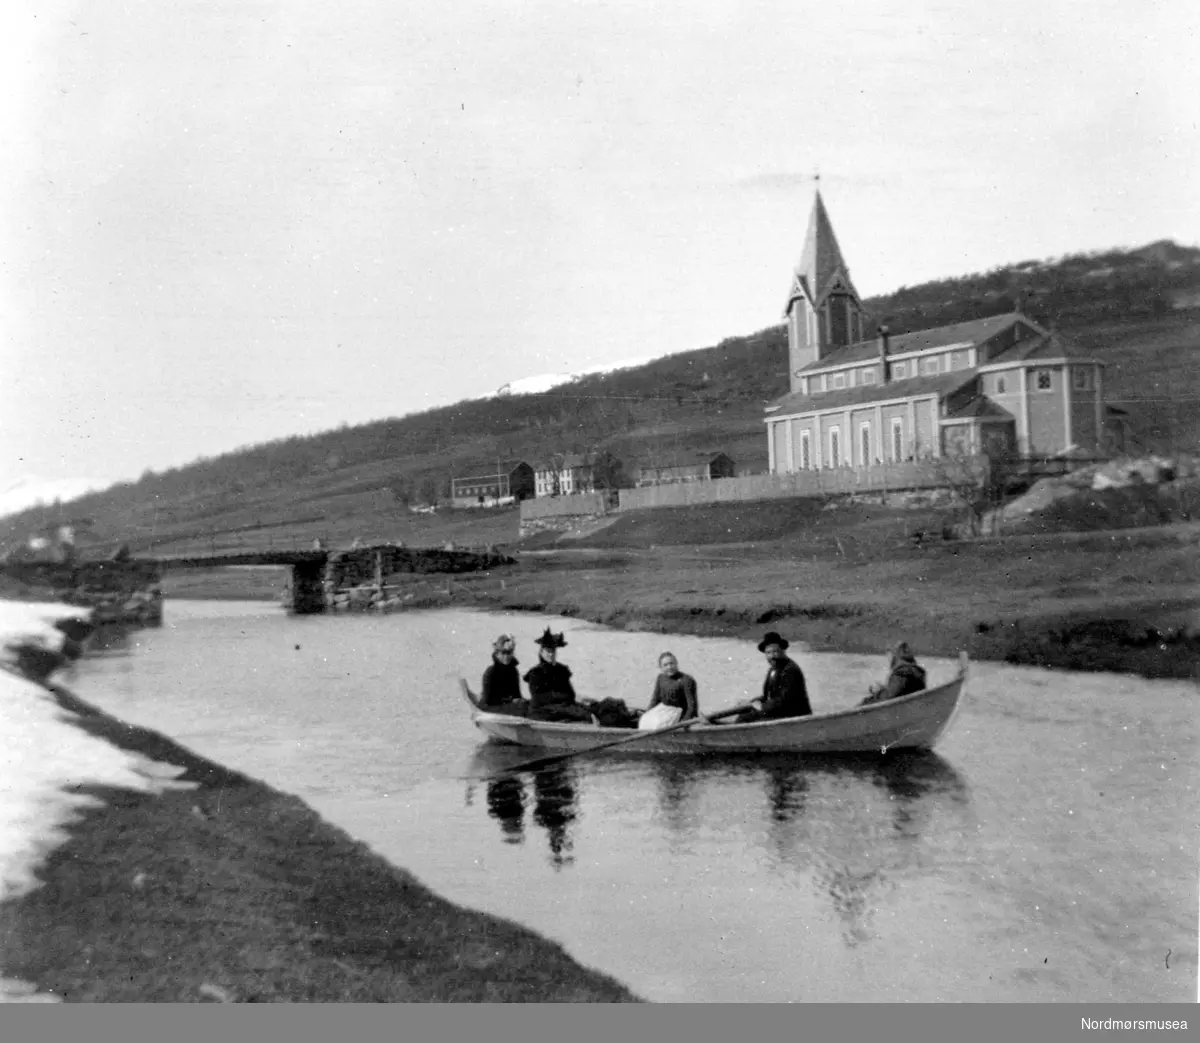 Foto fra Nesset kirke i Eidsvåg, Nesset kommune, hvor vi ser en en liten gruppe kvinner og en mann ute i en robåt på den vesle elven. Fotograf er Georg Sverdrup. Datering er mer usikker, men trolig fra perioden 1930 til 1939. Fra Nordmøre Museums fotosamlinger.
